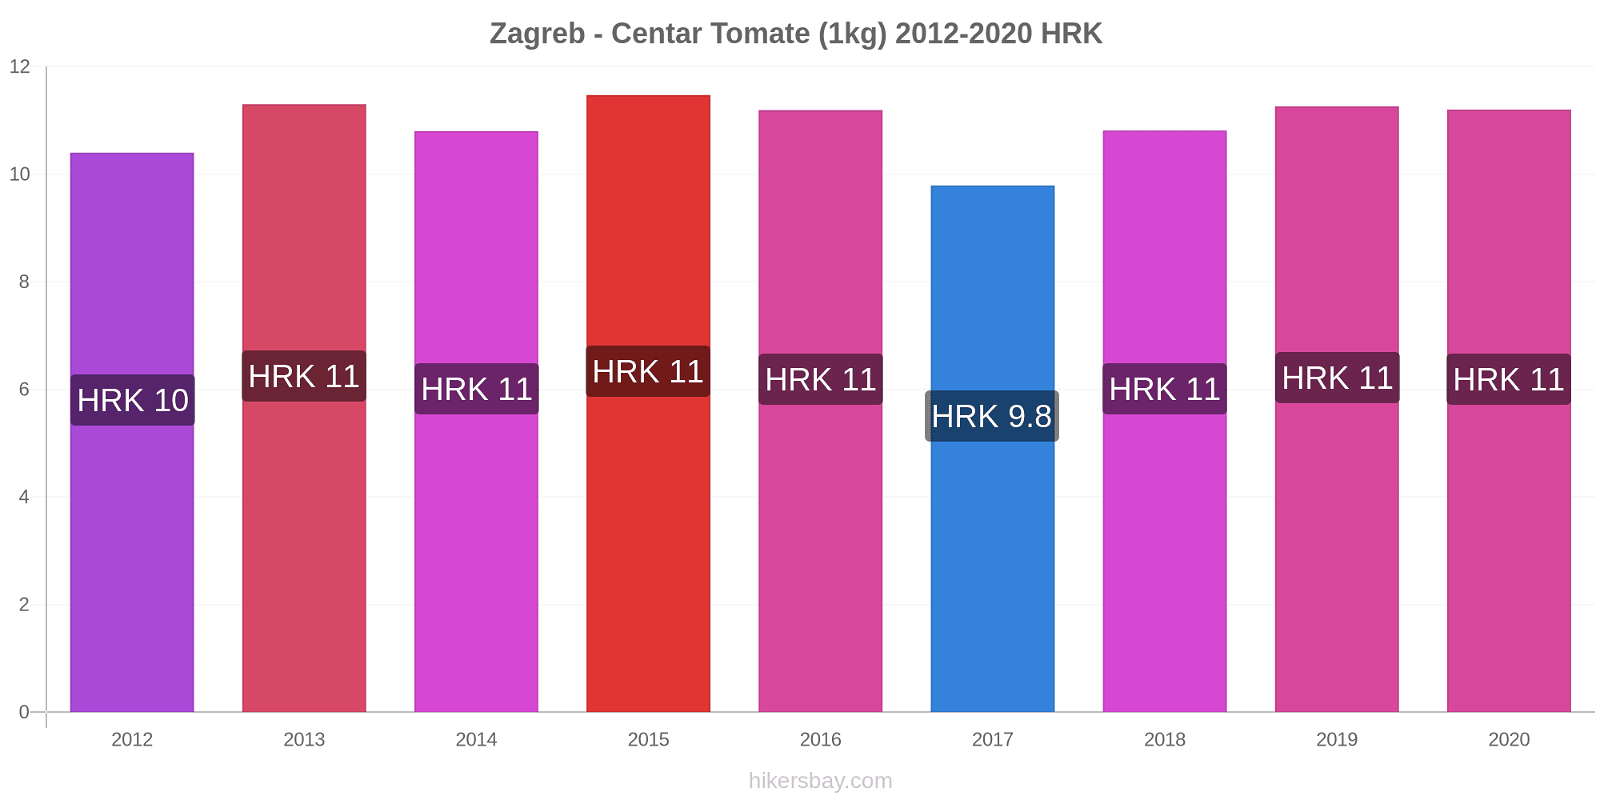 Zagreb - Centar variação de preço Tomate (1kg) hikersbay.com